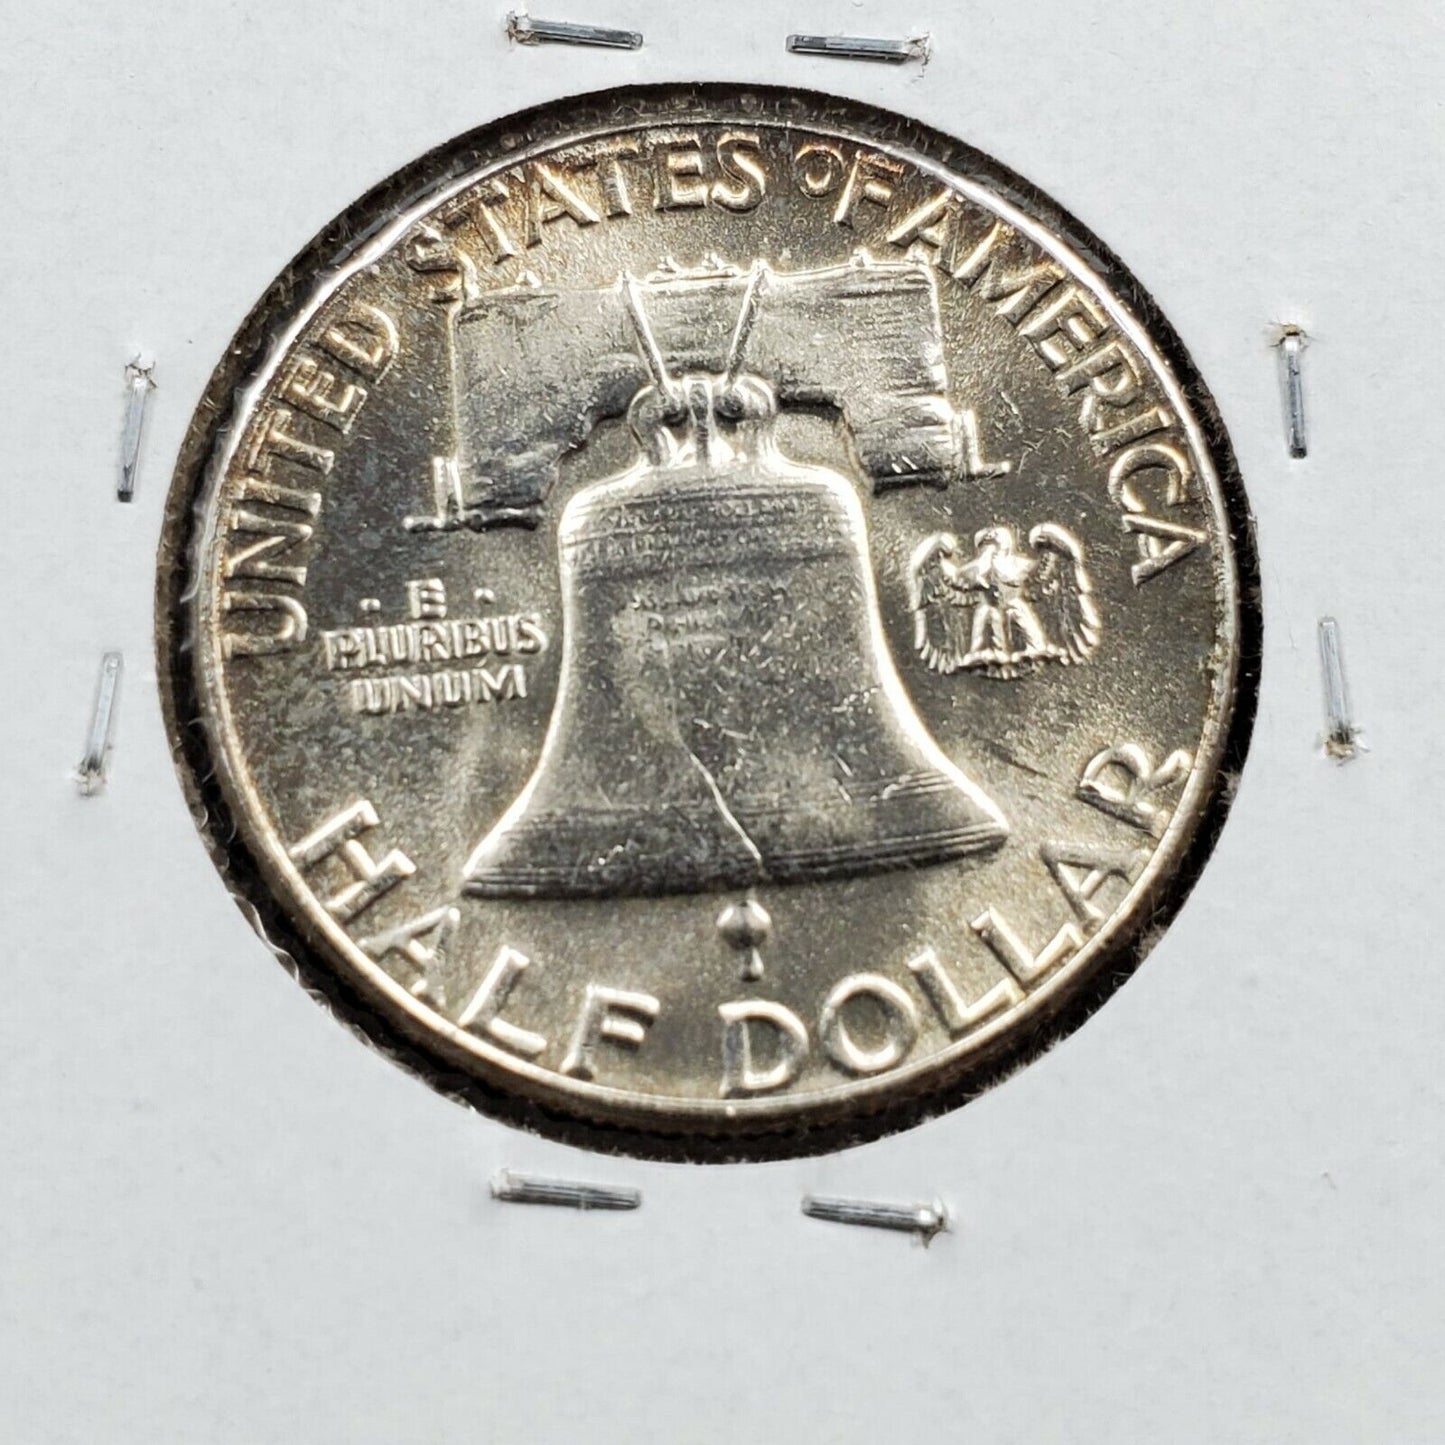 1955 P Franklin Silver Half Dollar Coin Choice BU Uncirculated Neat Toning Toner